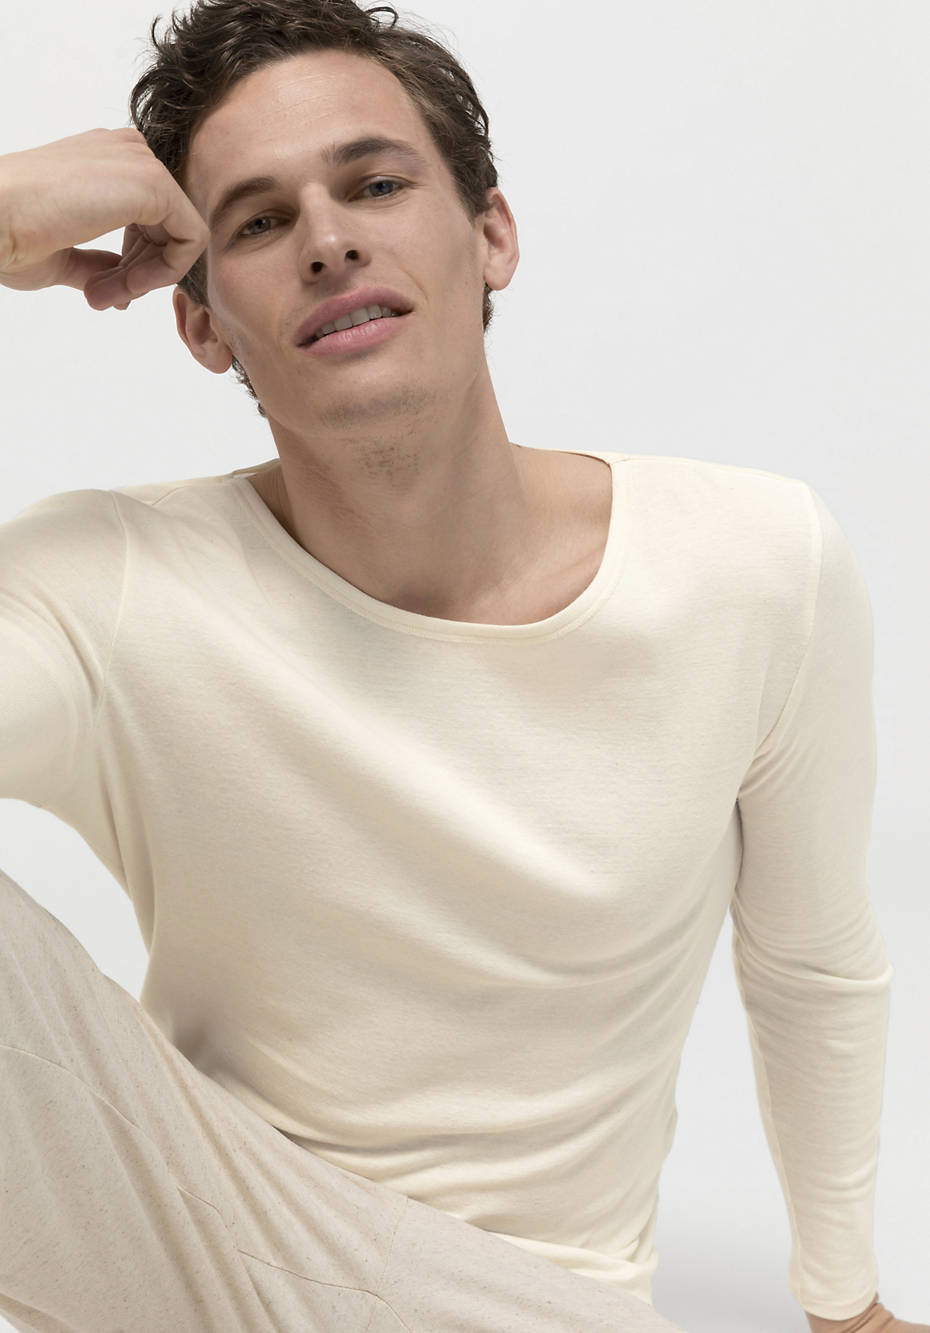 Long-sleeved shirt ModernNATURE made of pure organic cotton